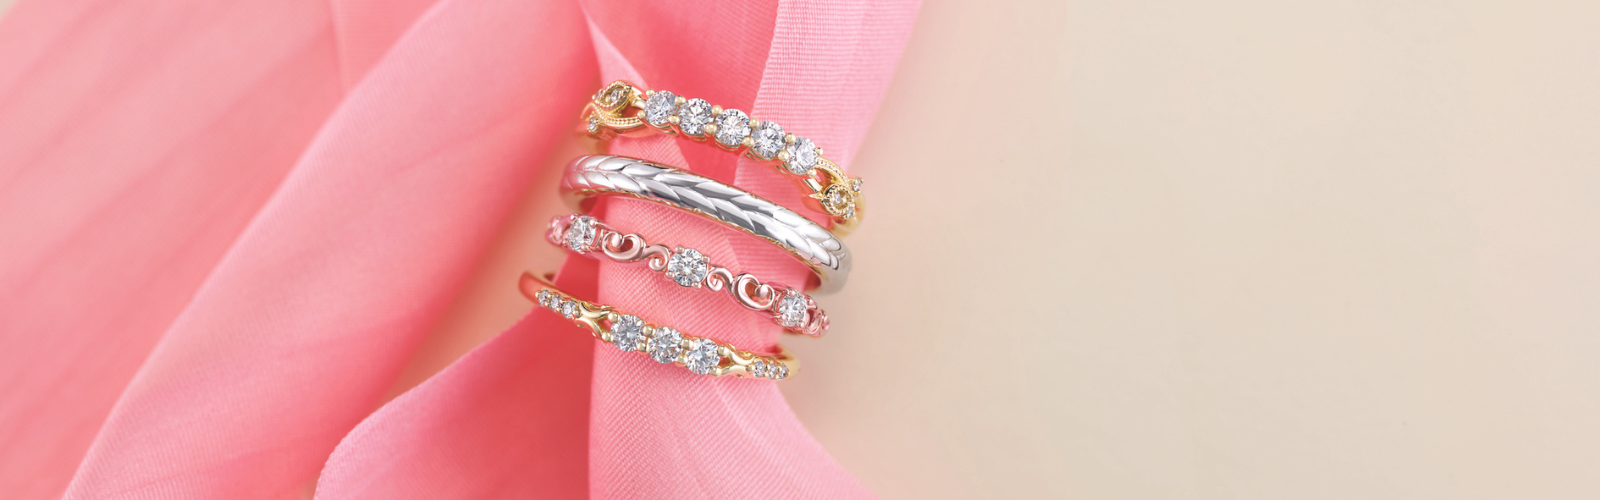 Shop All Engagement Rings at David Douglas Diamonds & Jewelry Marietta, GA